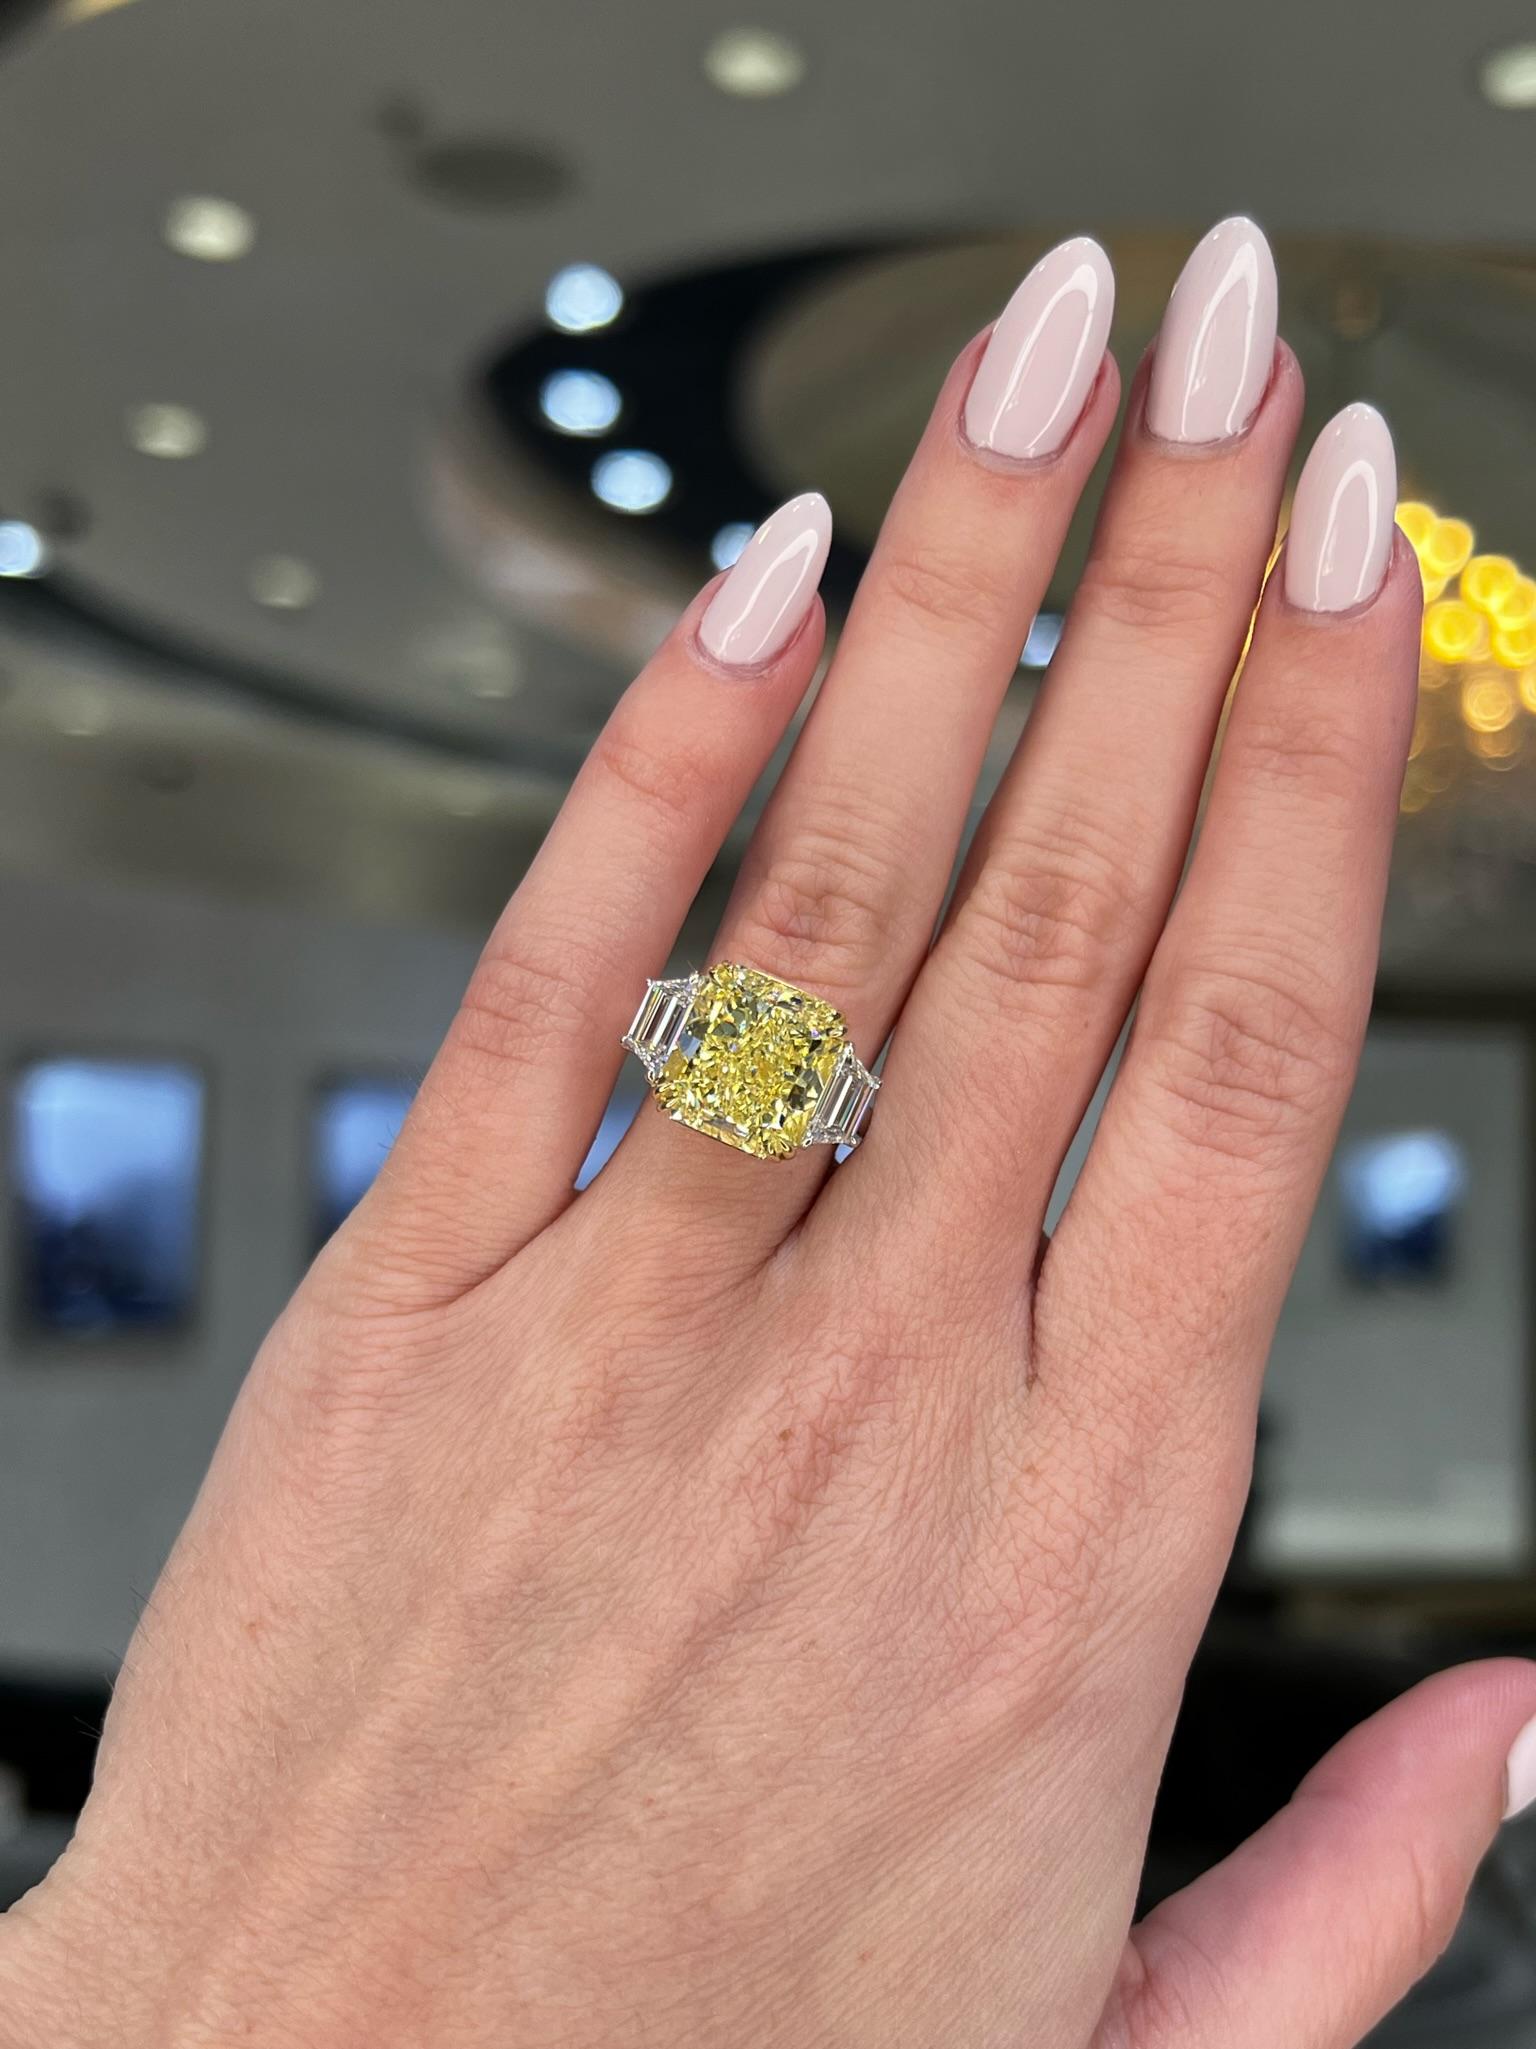 David Rosenberg 7.81 Carat Radiant Fancy Yellow VS1 GIA Diamond Engagement Ring For Sale 3